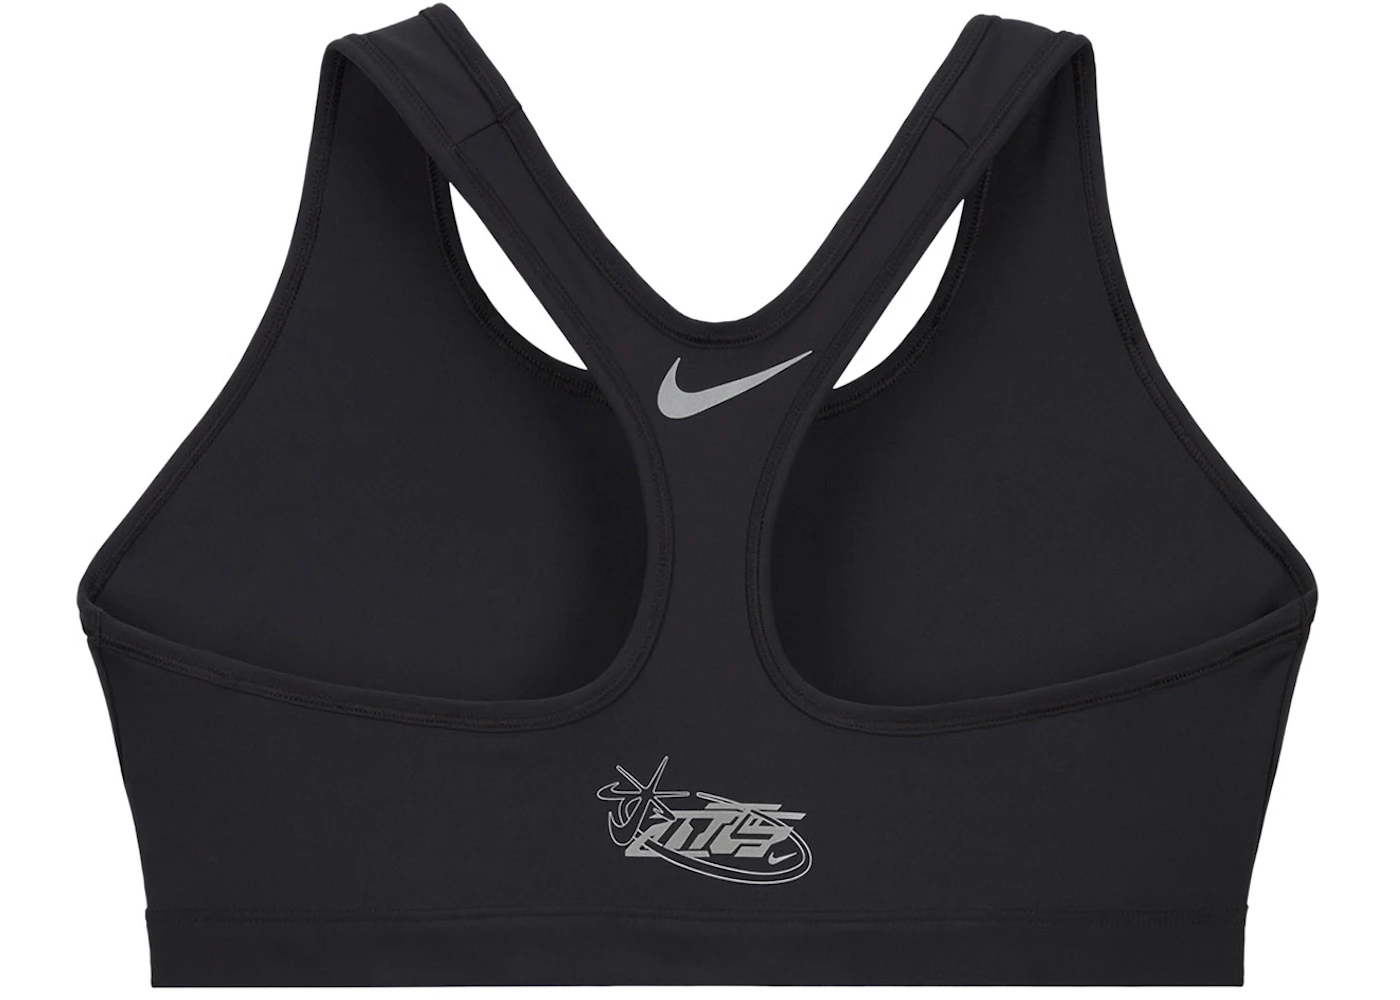 Nike Women's Pro Swoosh Medium-Support Non-Padded Sports Bra